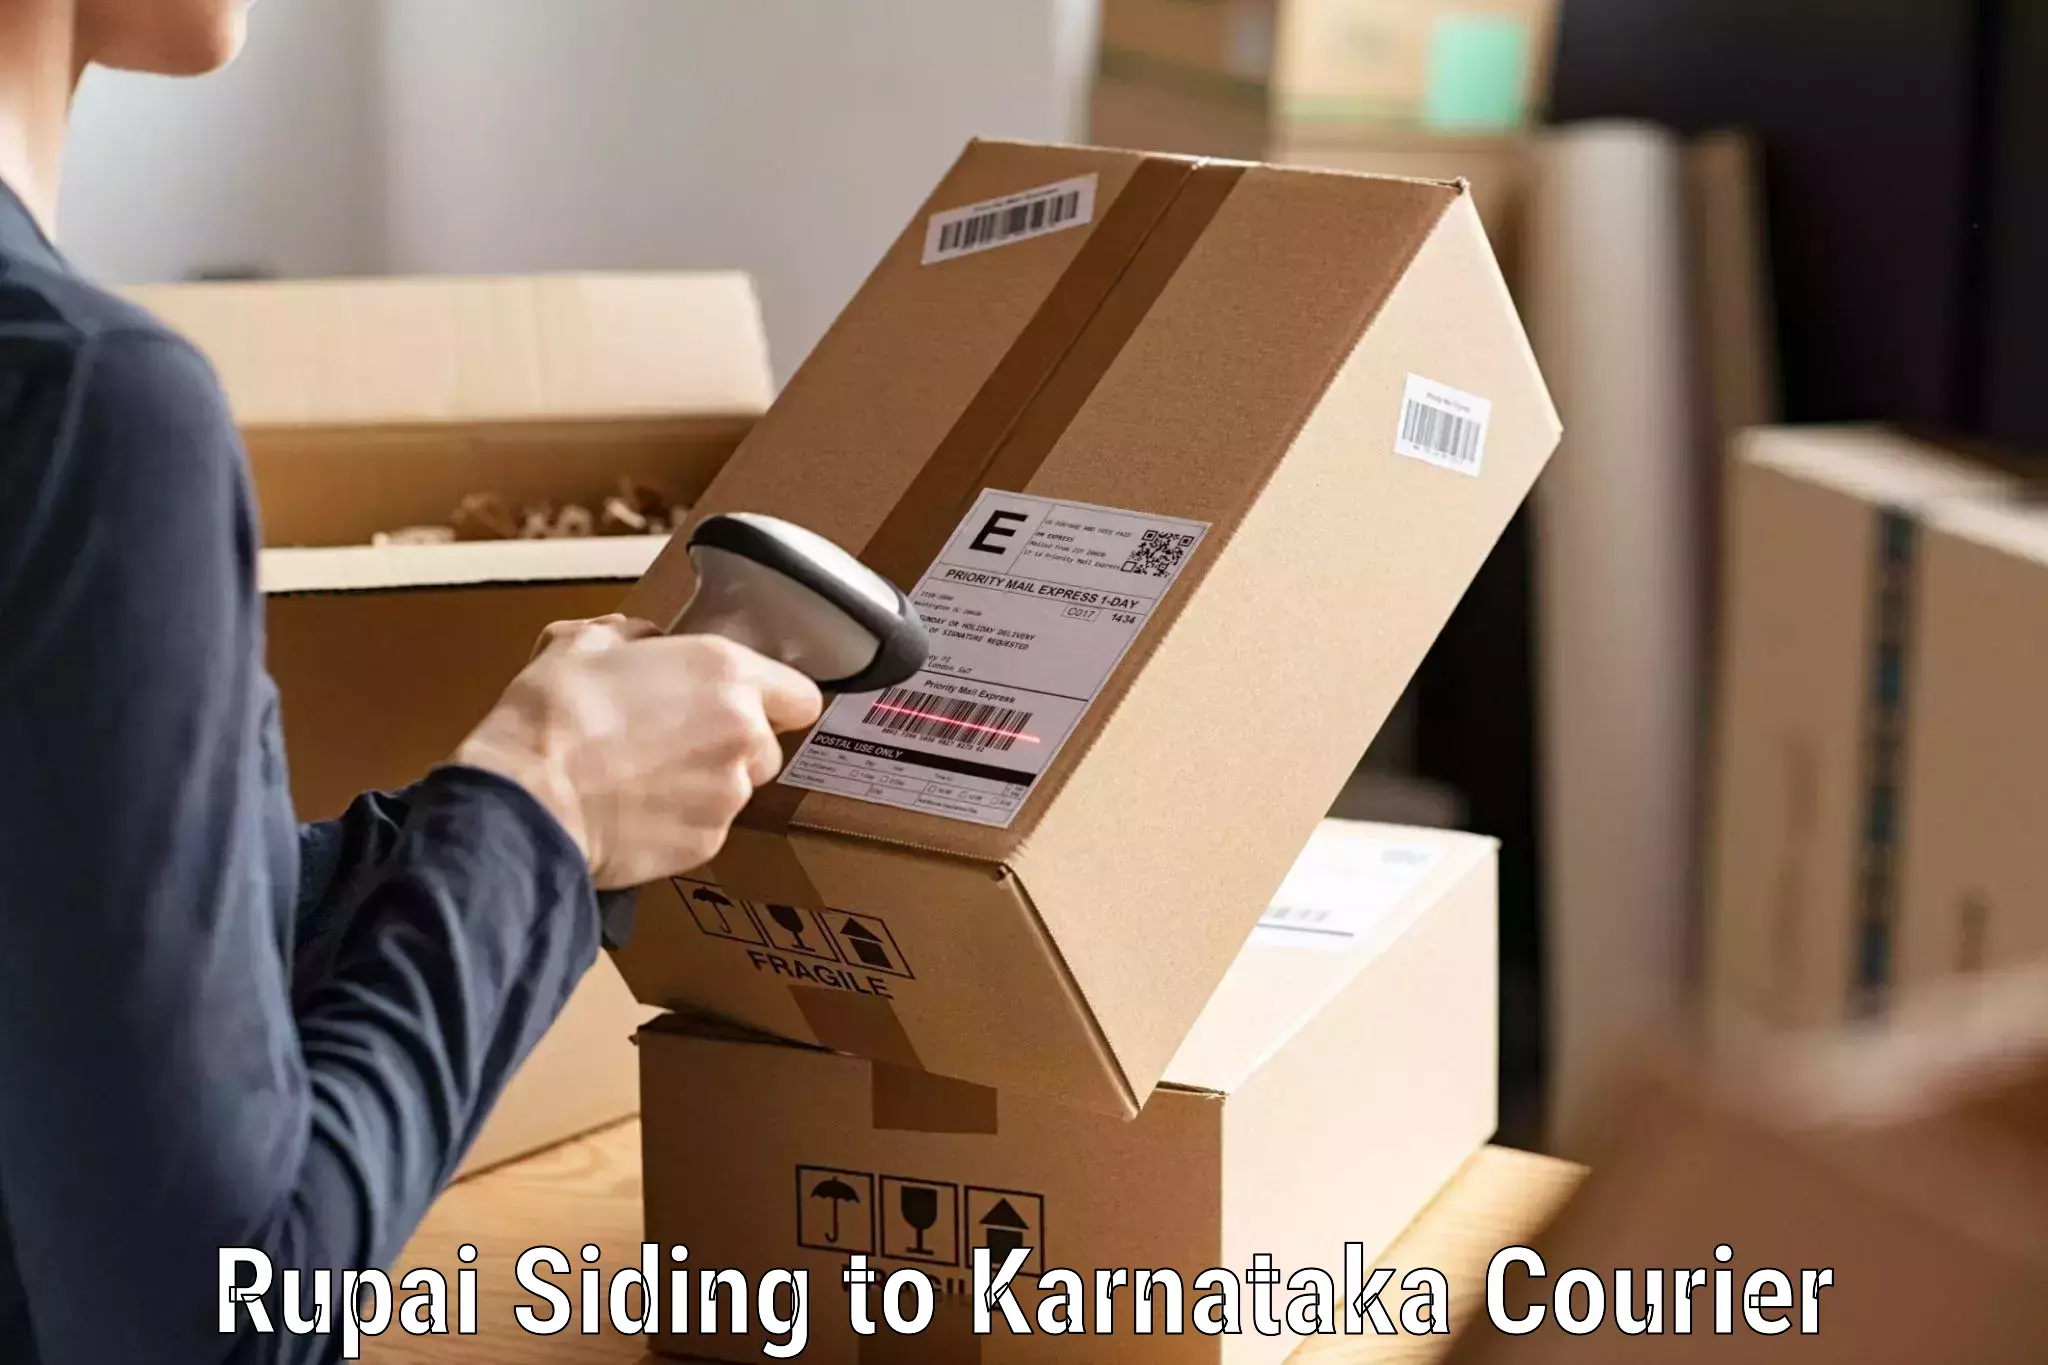 On-demand courier Rupai Siding to Karnataka